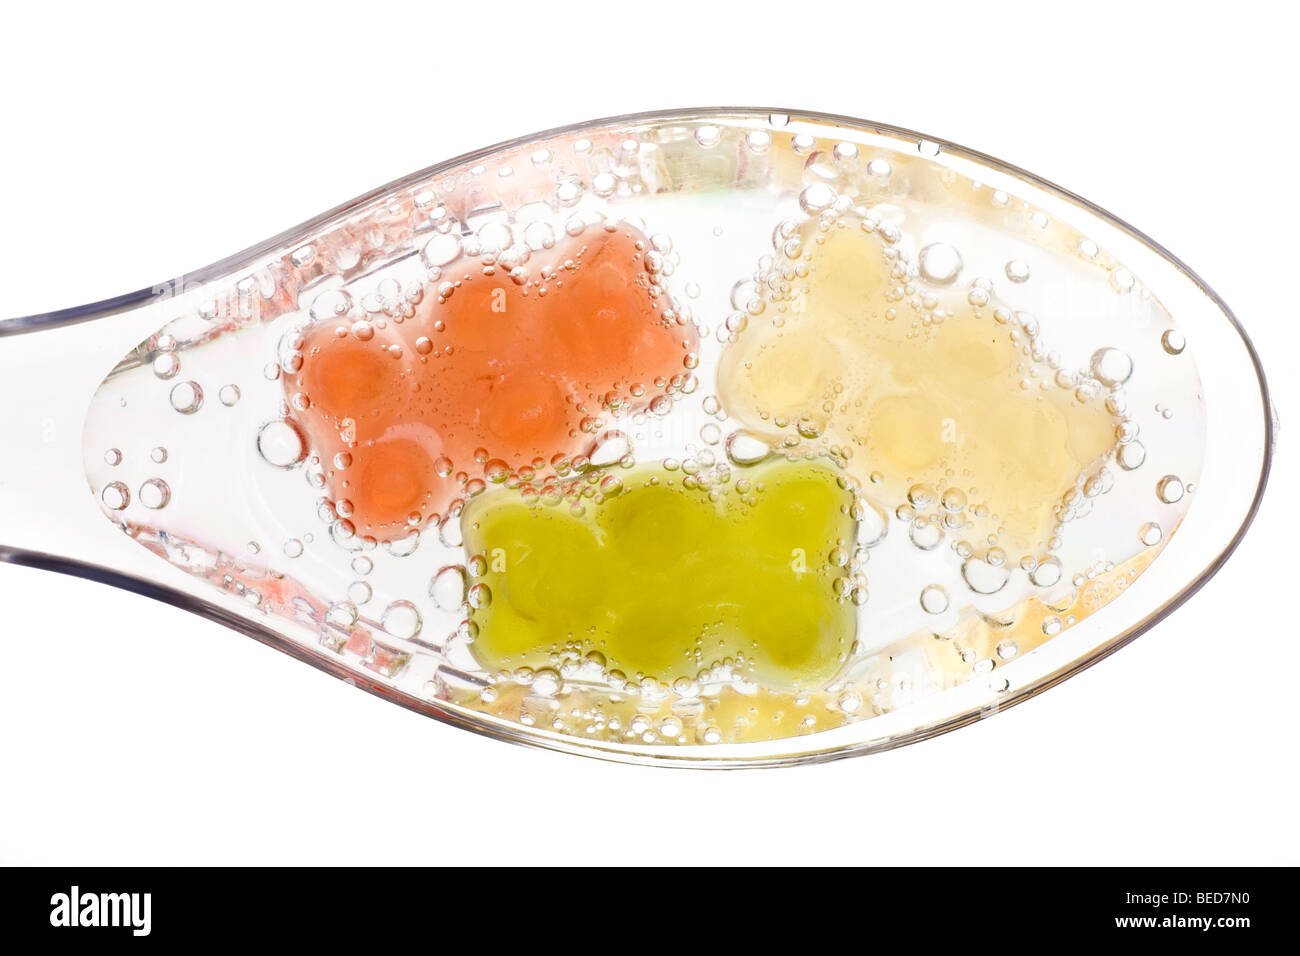 Los osos Gummi en agua transparente cucharas Foto de stock